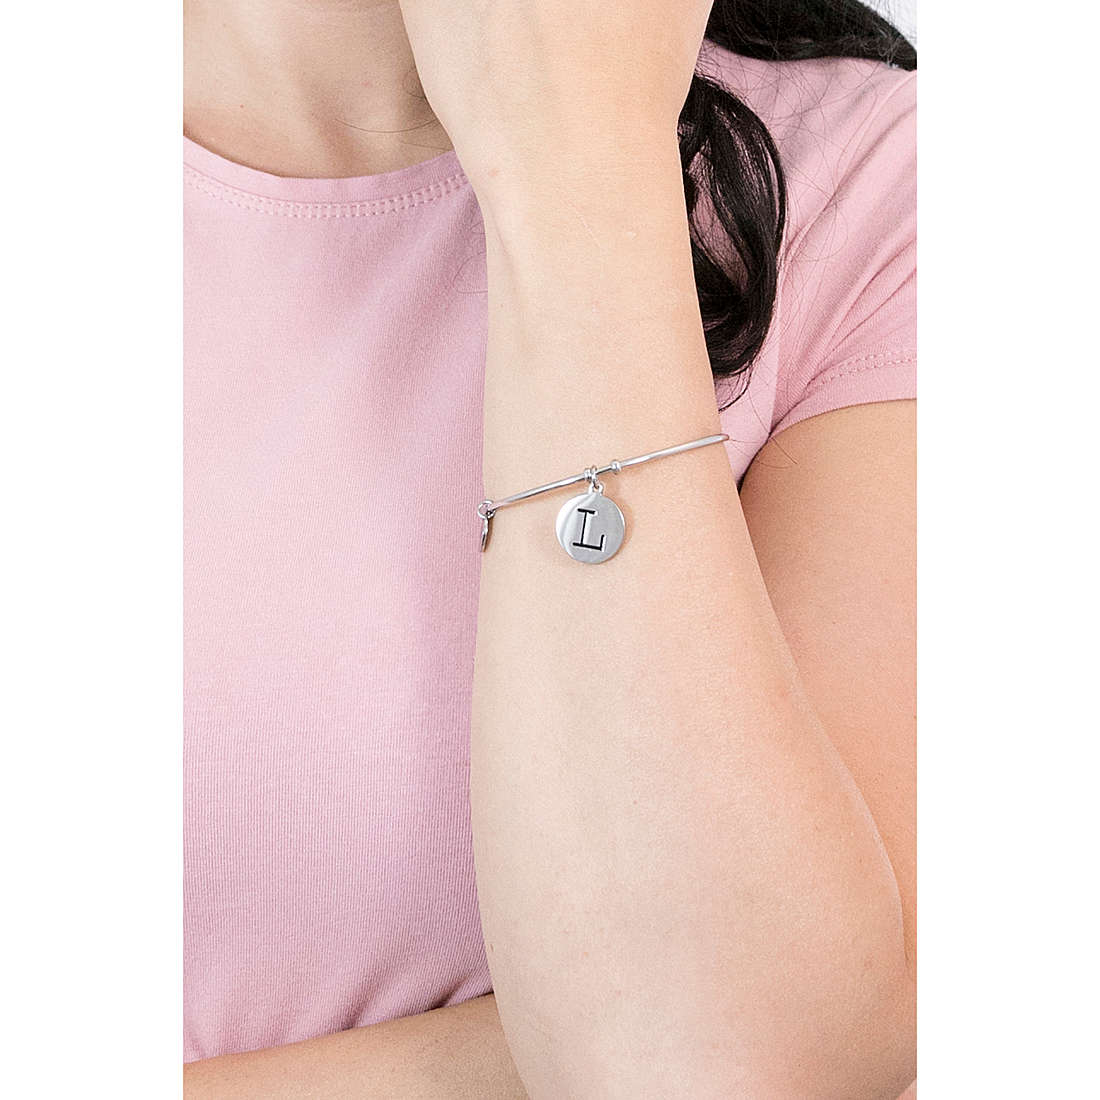 Kidult bracelets Symbols woman 231555l wearing